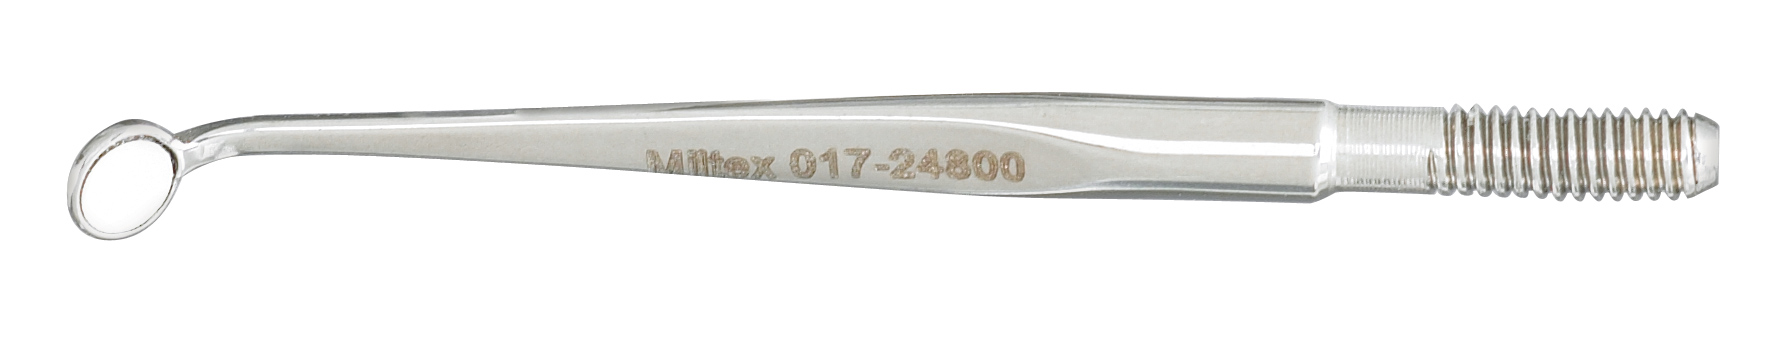 MILTEX MICRO MIRROR 3mm OVAL CONE SOCKET EA INTEGRA #017-24800  - Click Image to Close